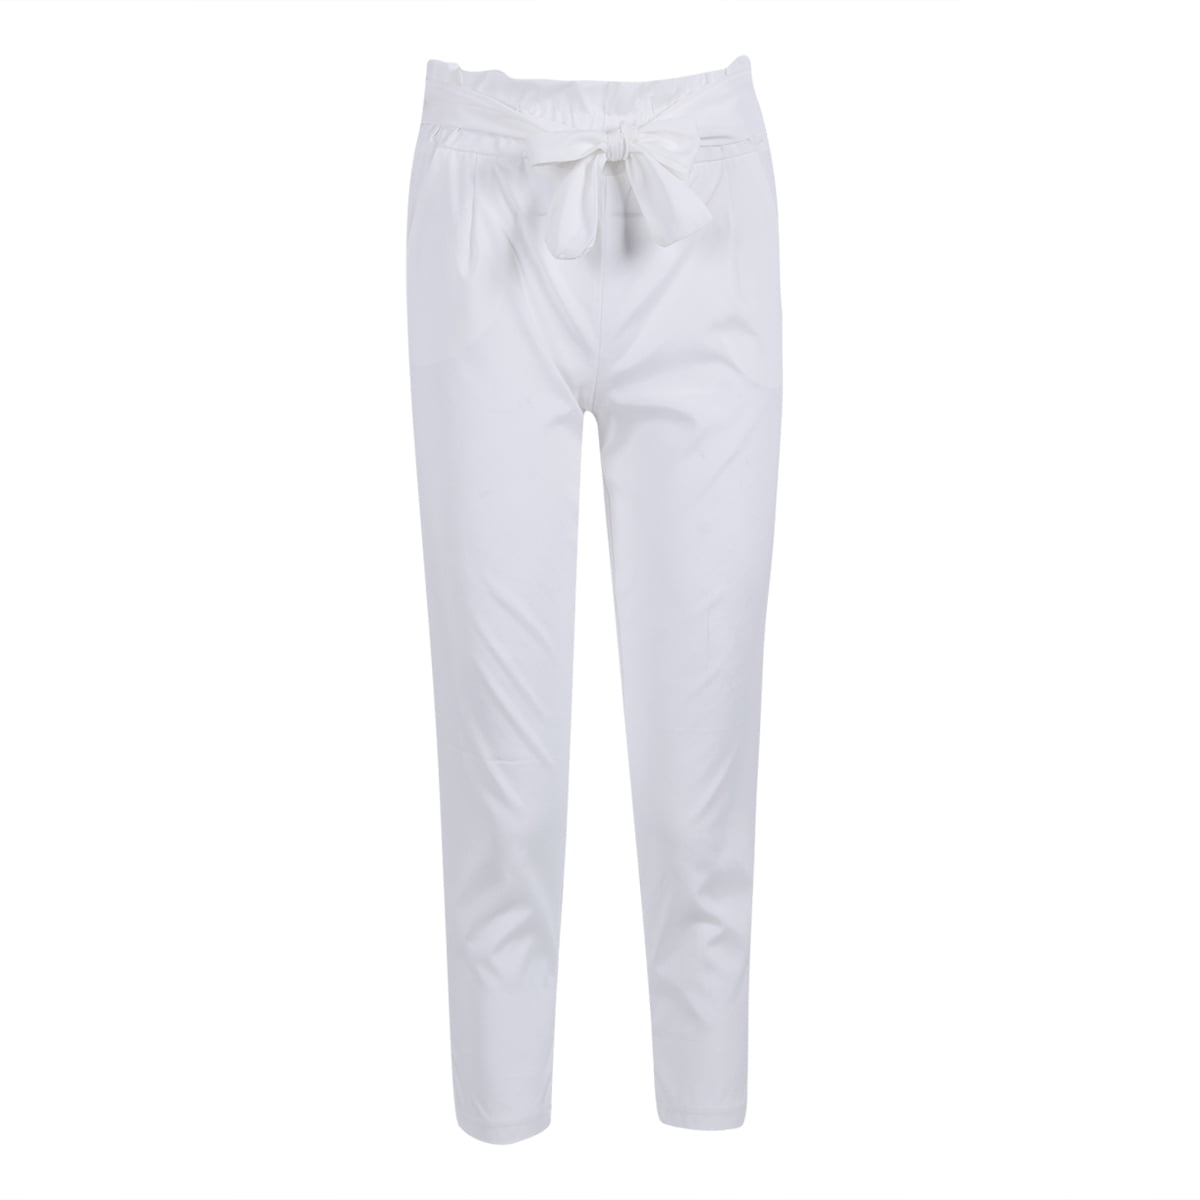 white skinny trousers ladies